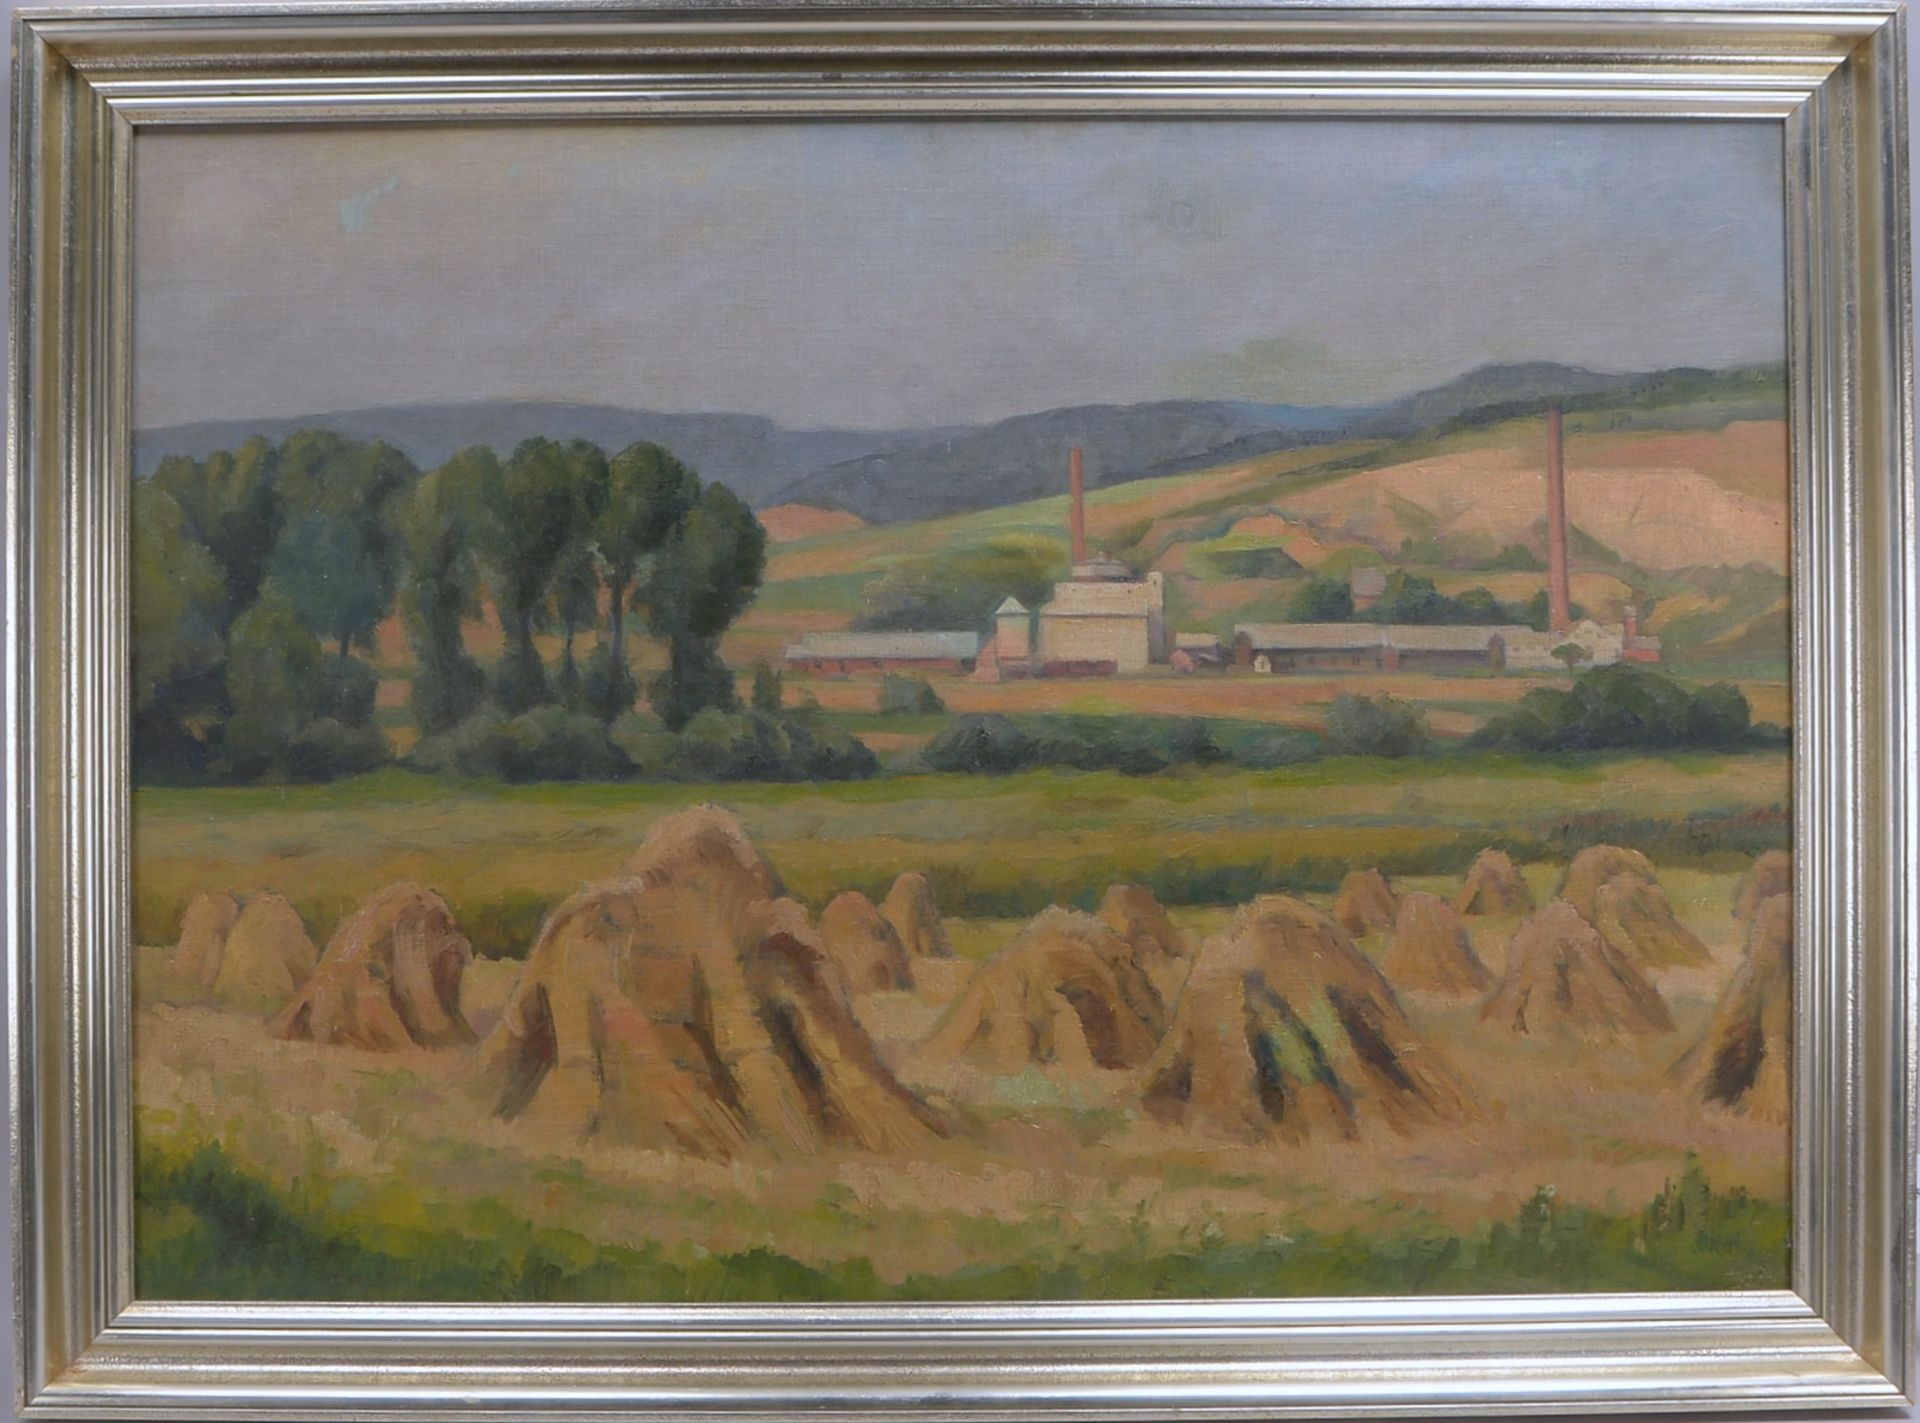 Gemälde, 'Kornhocken vor Farbrikanlage', Öl/Lw, unsign.; Bildmaße 65 x 92 cm